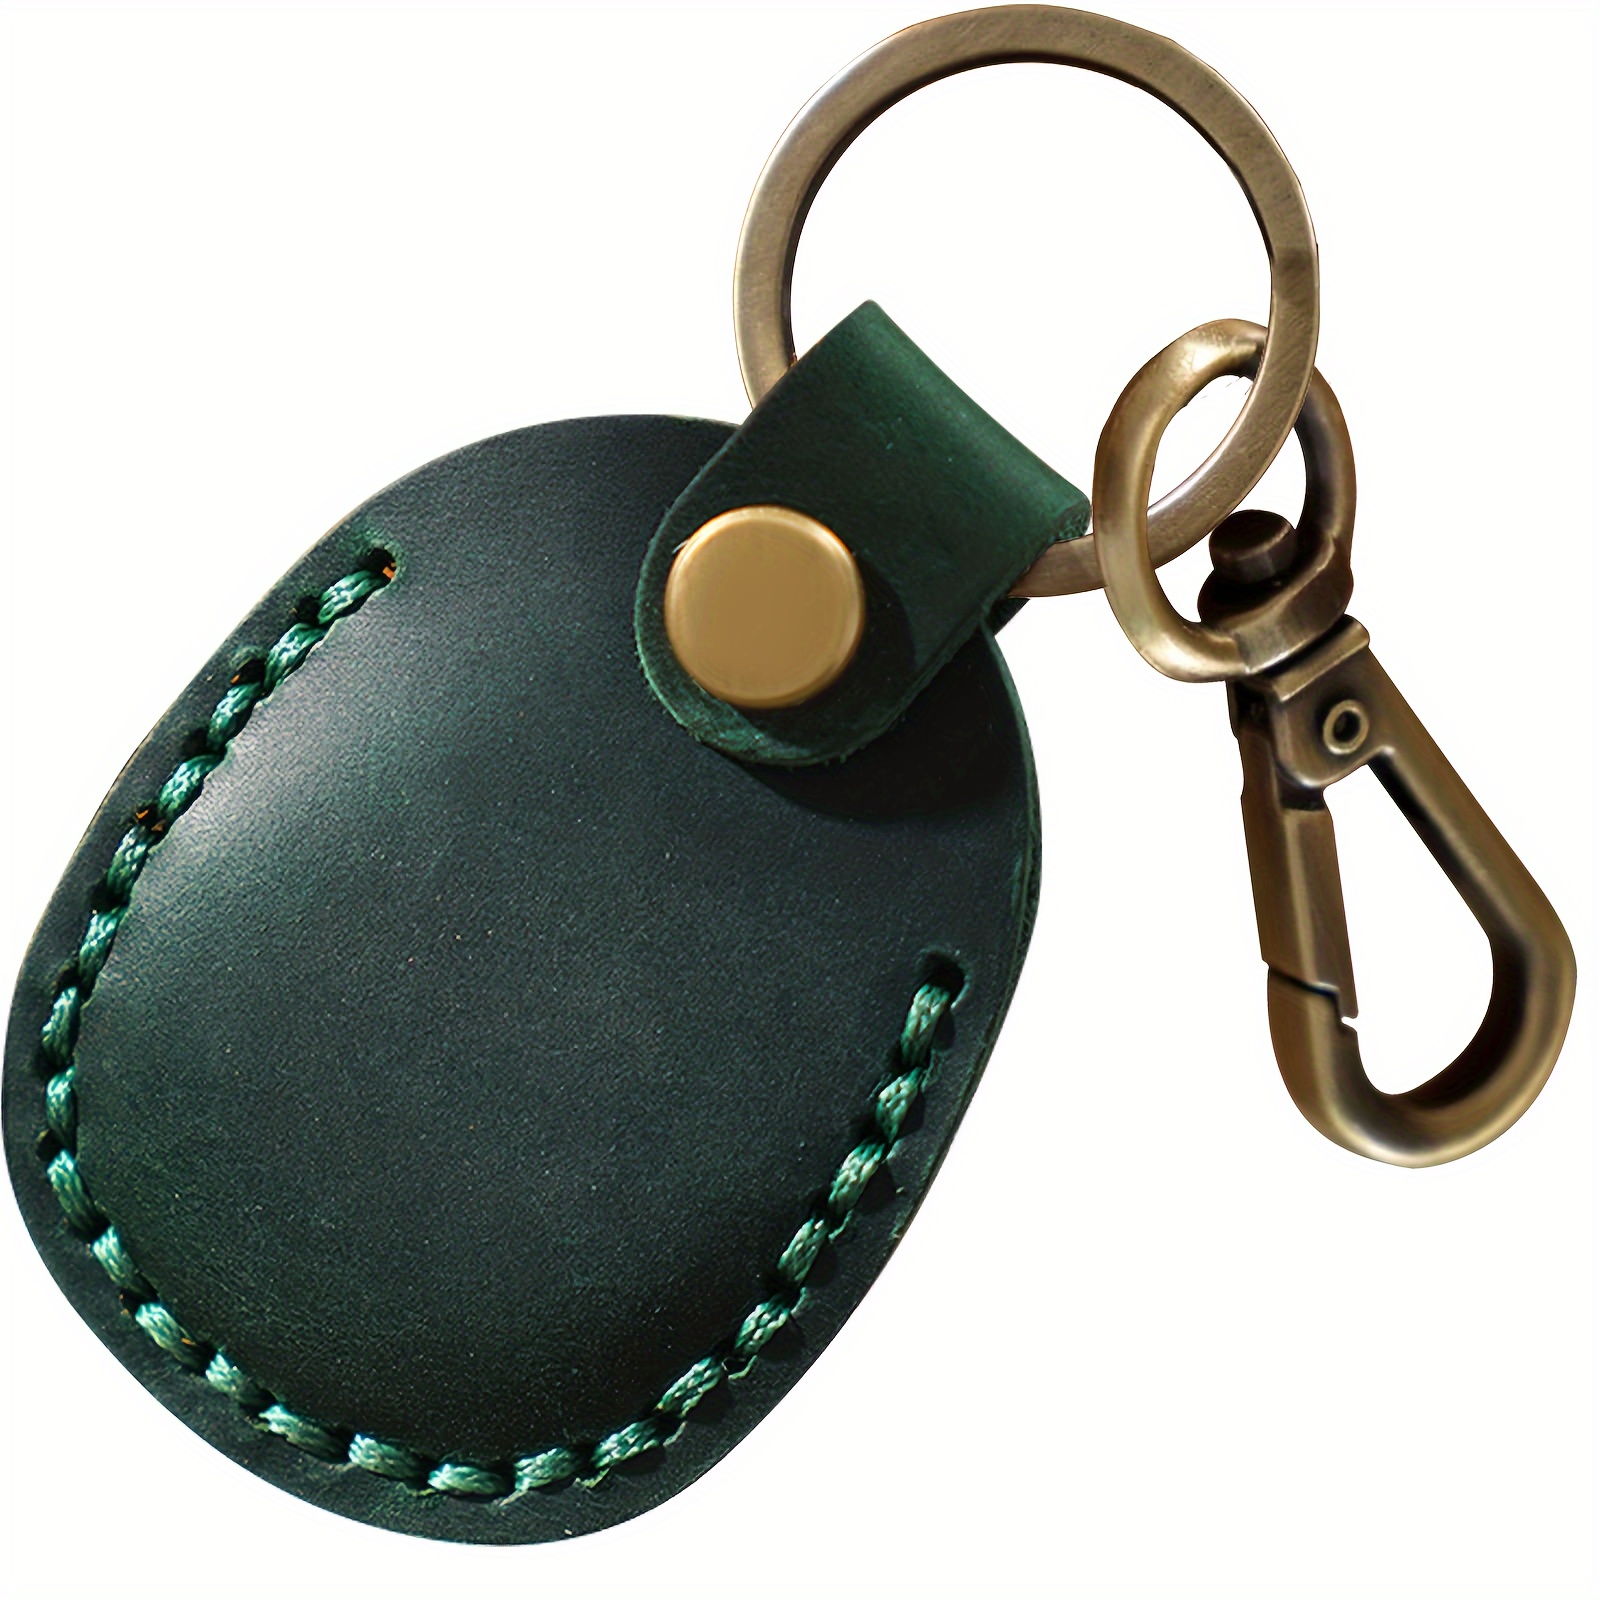 Leather AirTag Keychain Case - The Sleeve